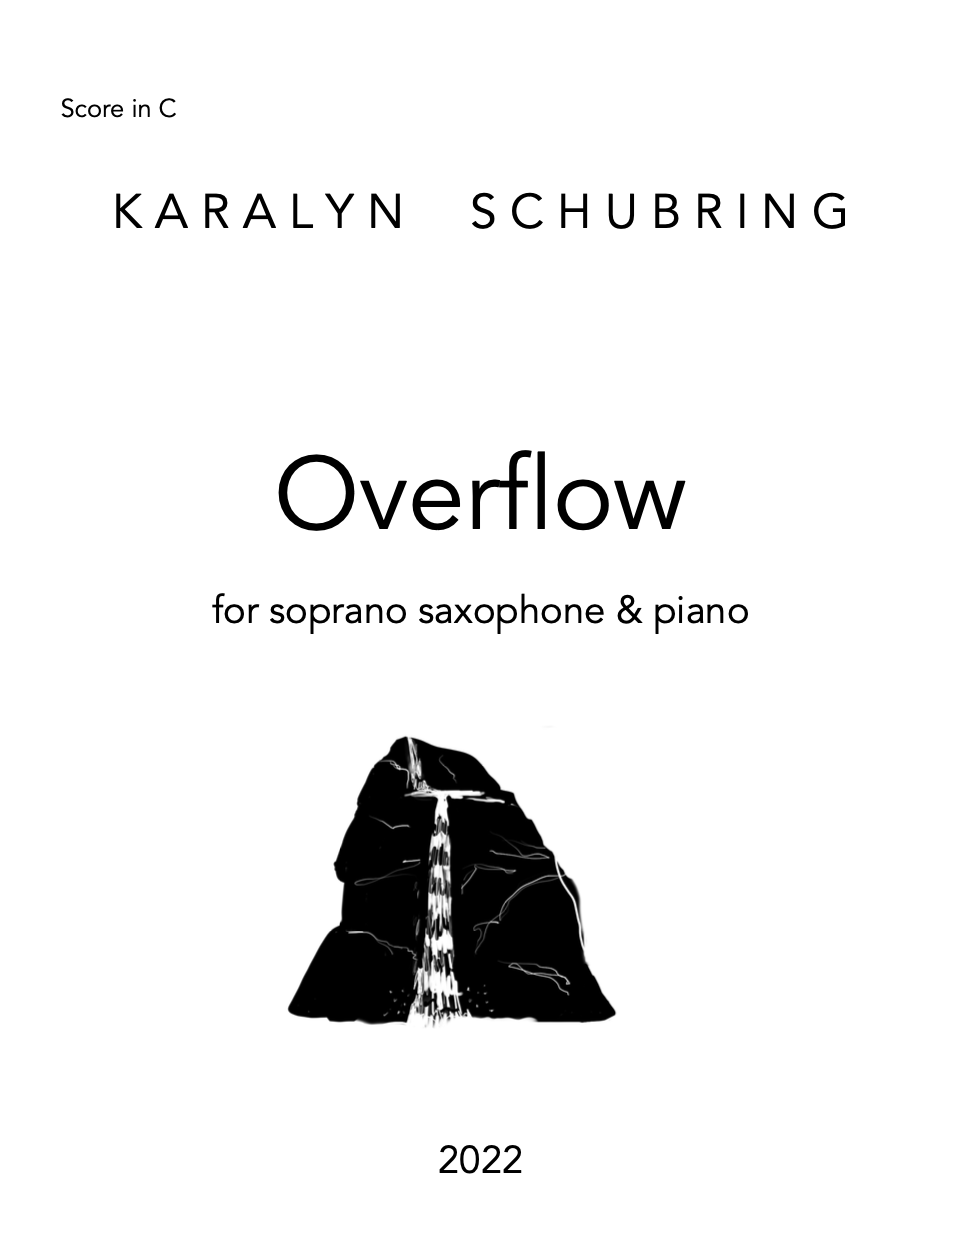 Overflow by Karalyn Schubring